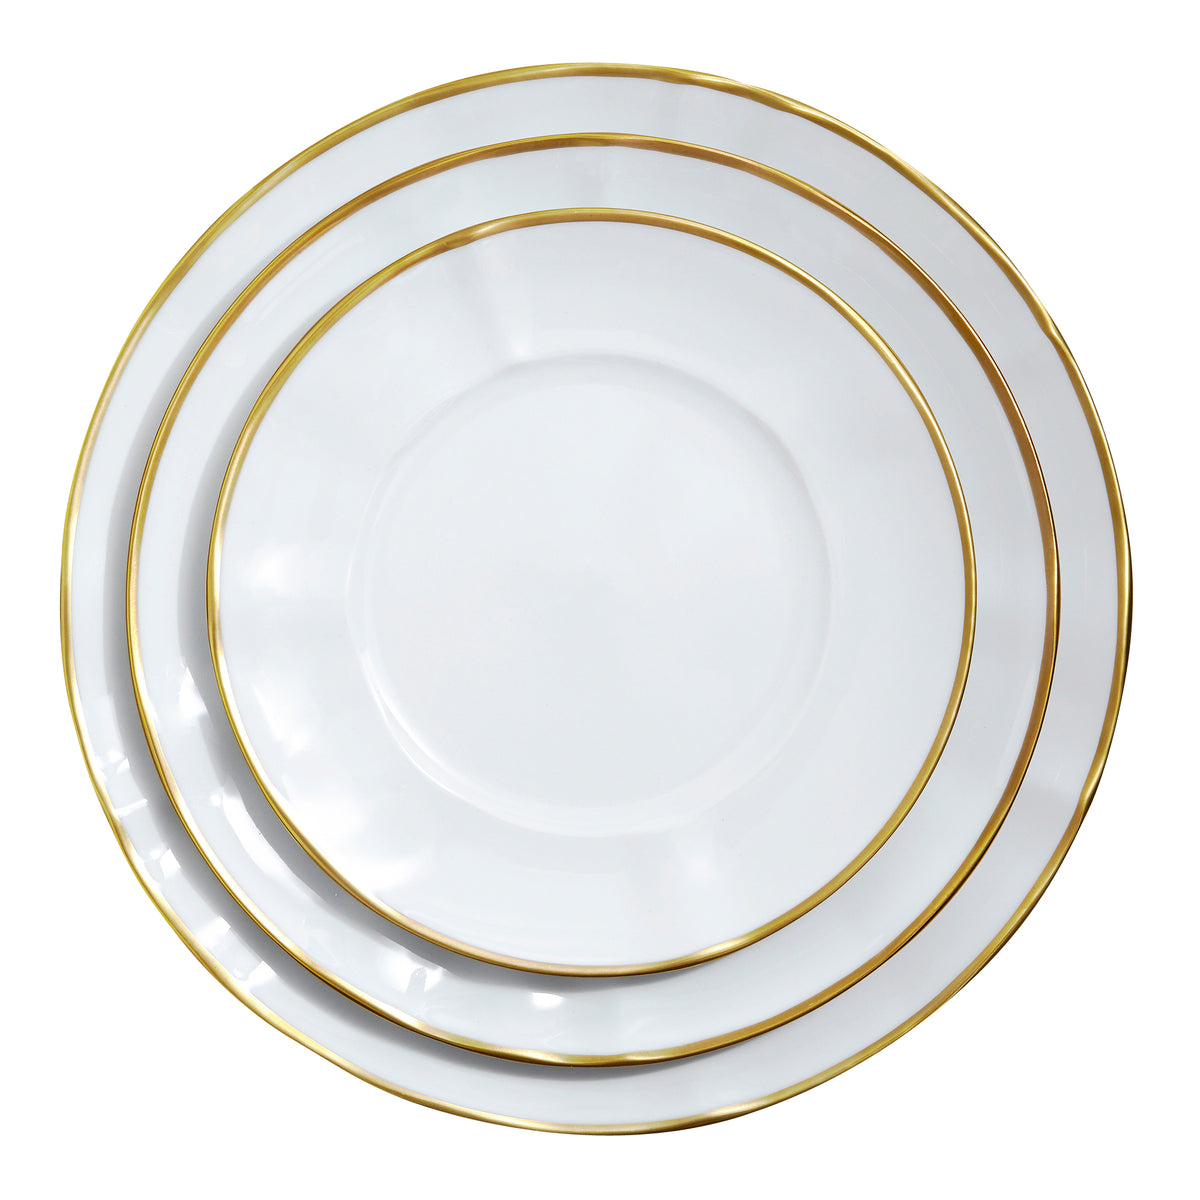 Simply Elegant Gold Dessert Plate